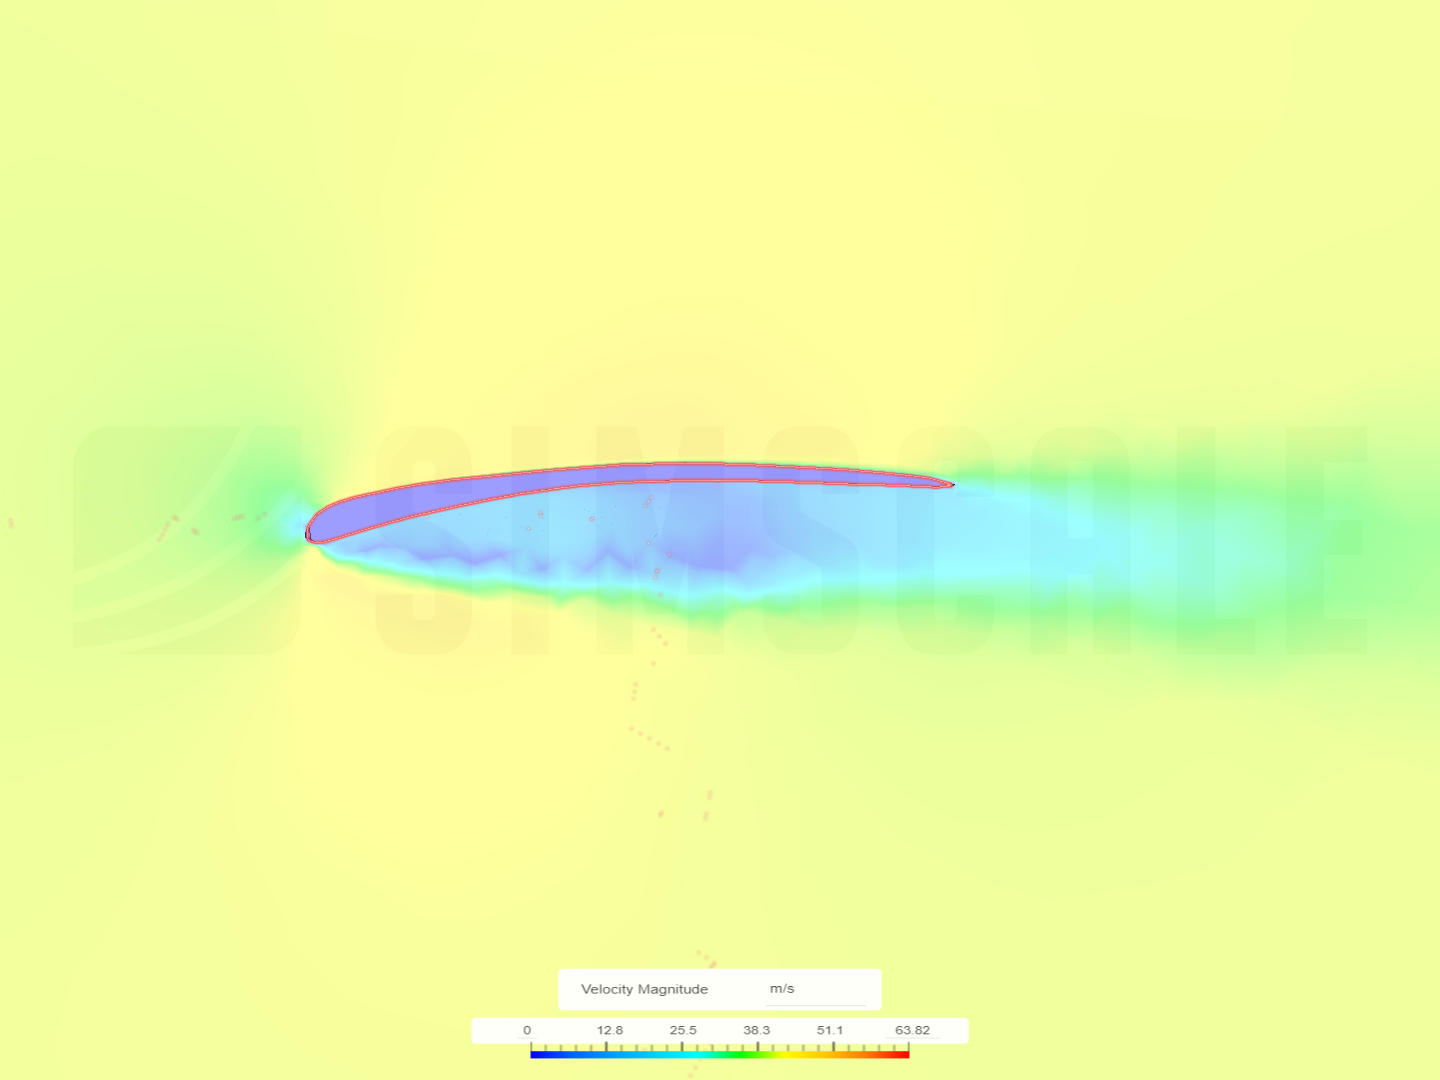 Airfoil_analysis image